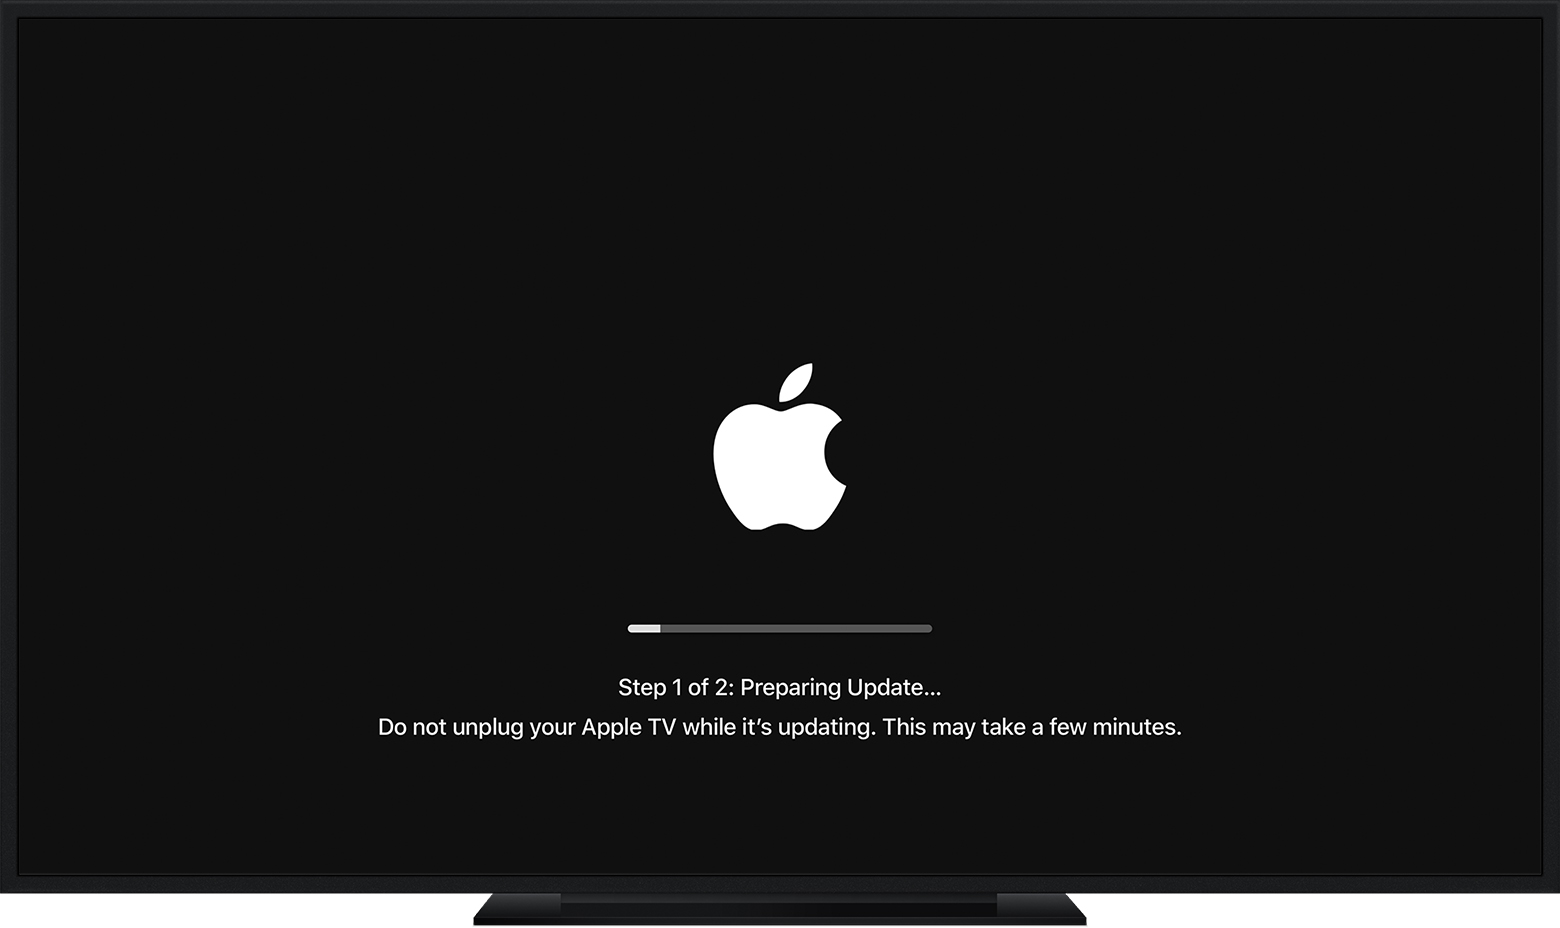 Mac update system manual download